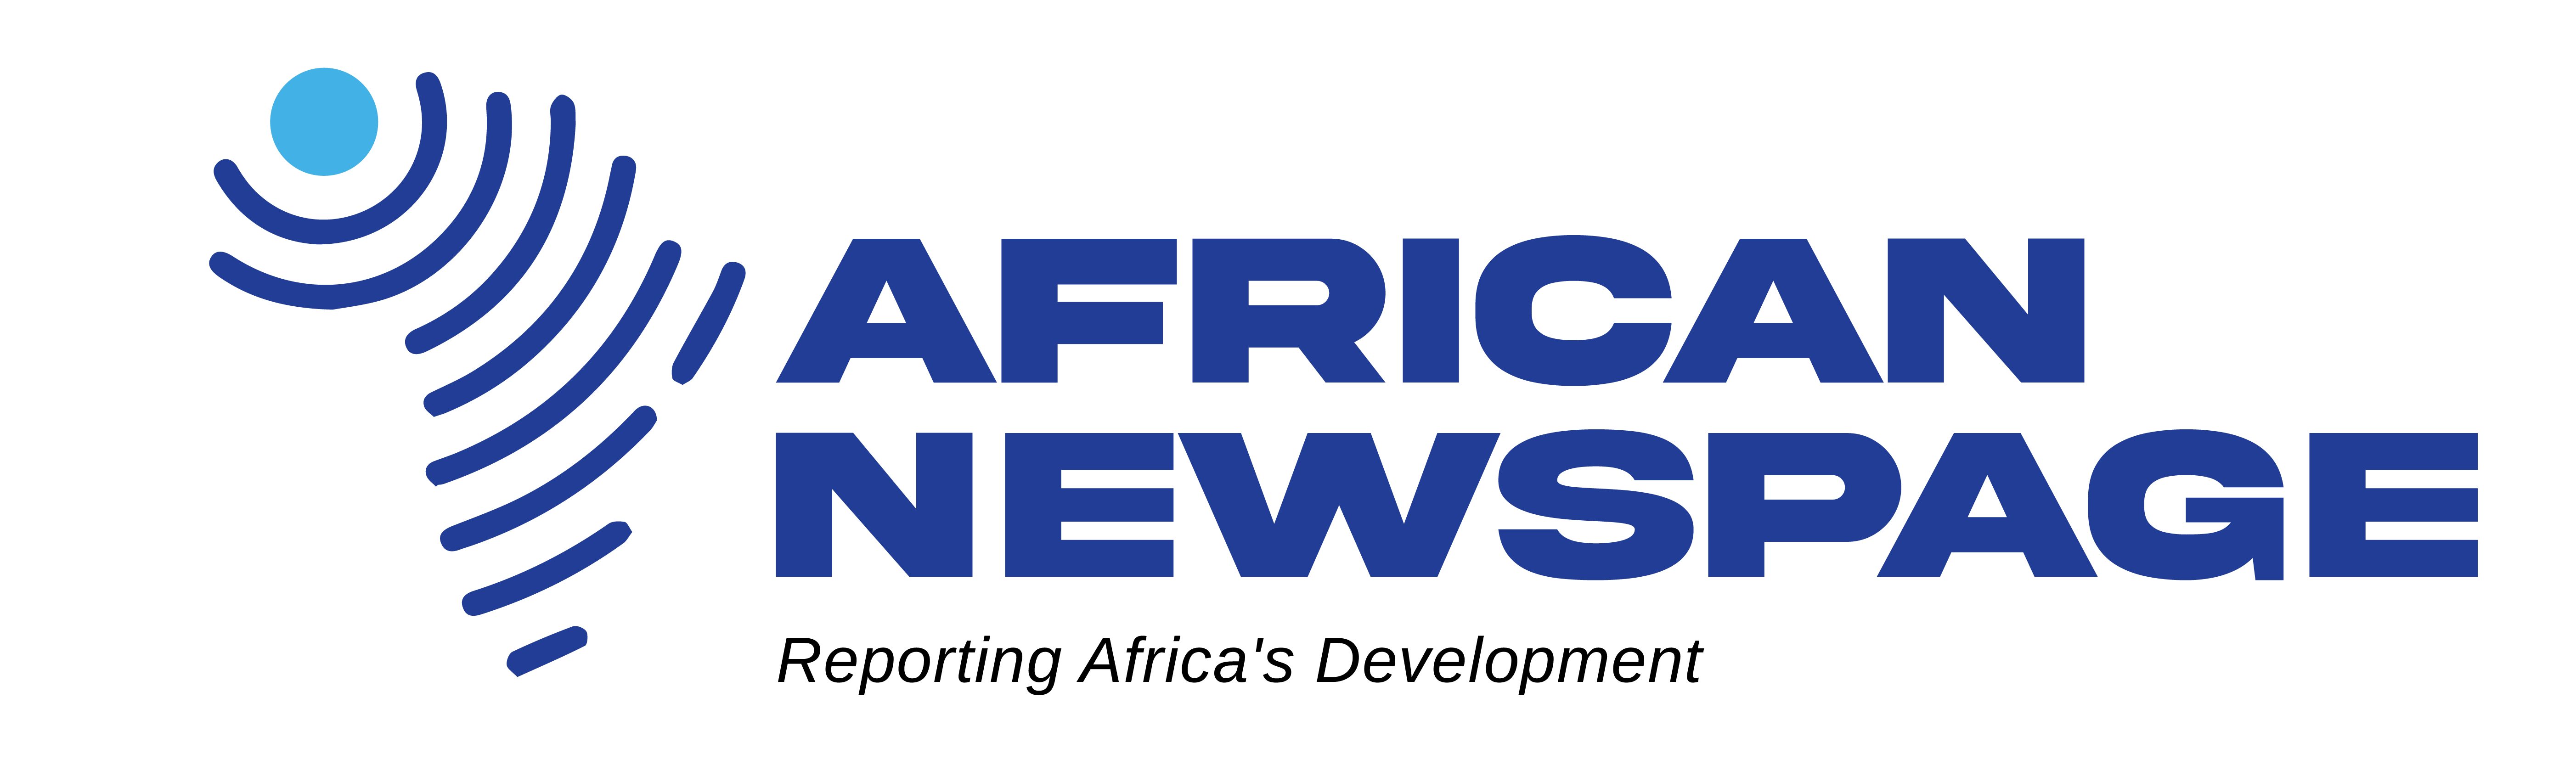 African Newspage